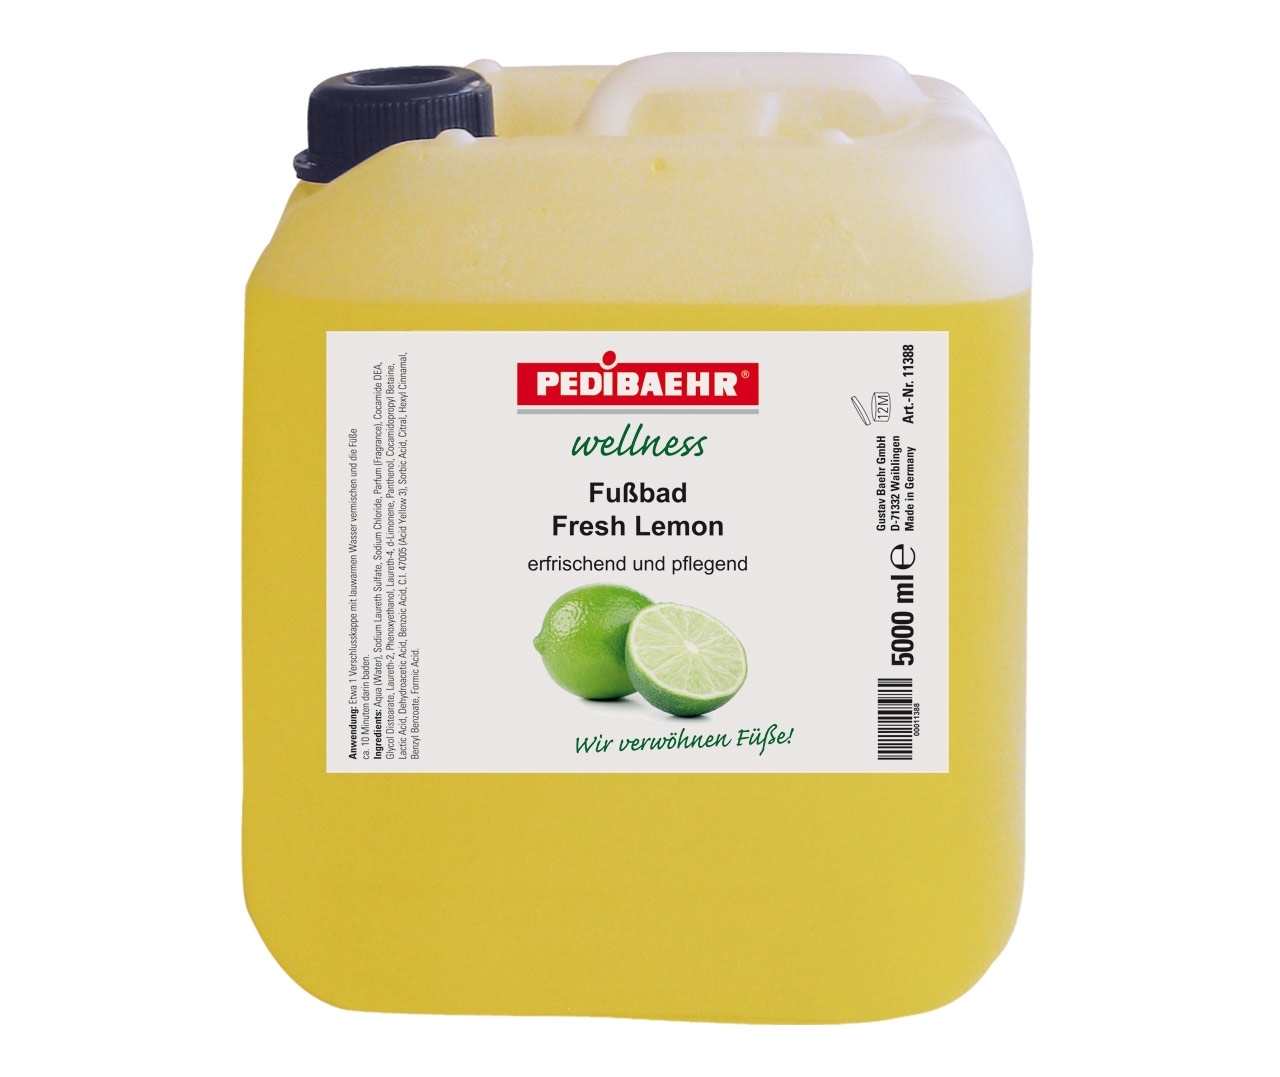 PEDIBAEHR - Wellness Duft-Fußbad Fresh Lemon, 5000 ml